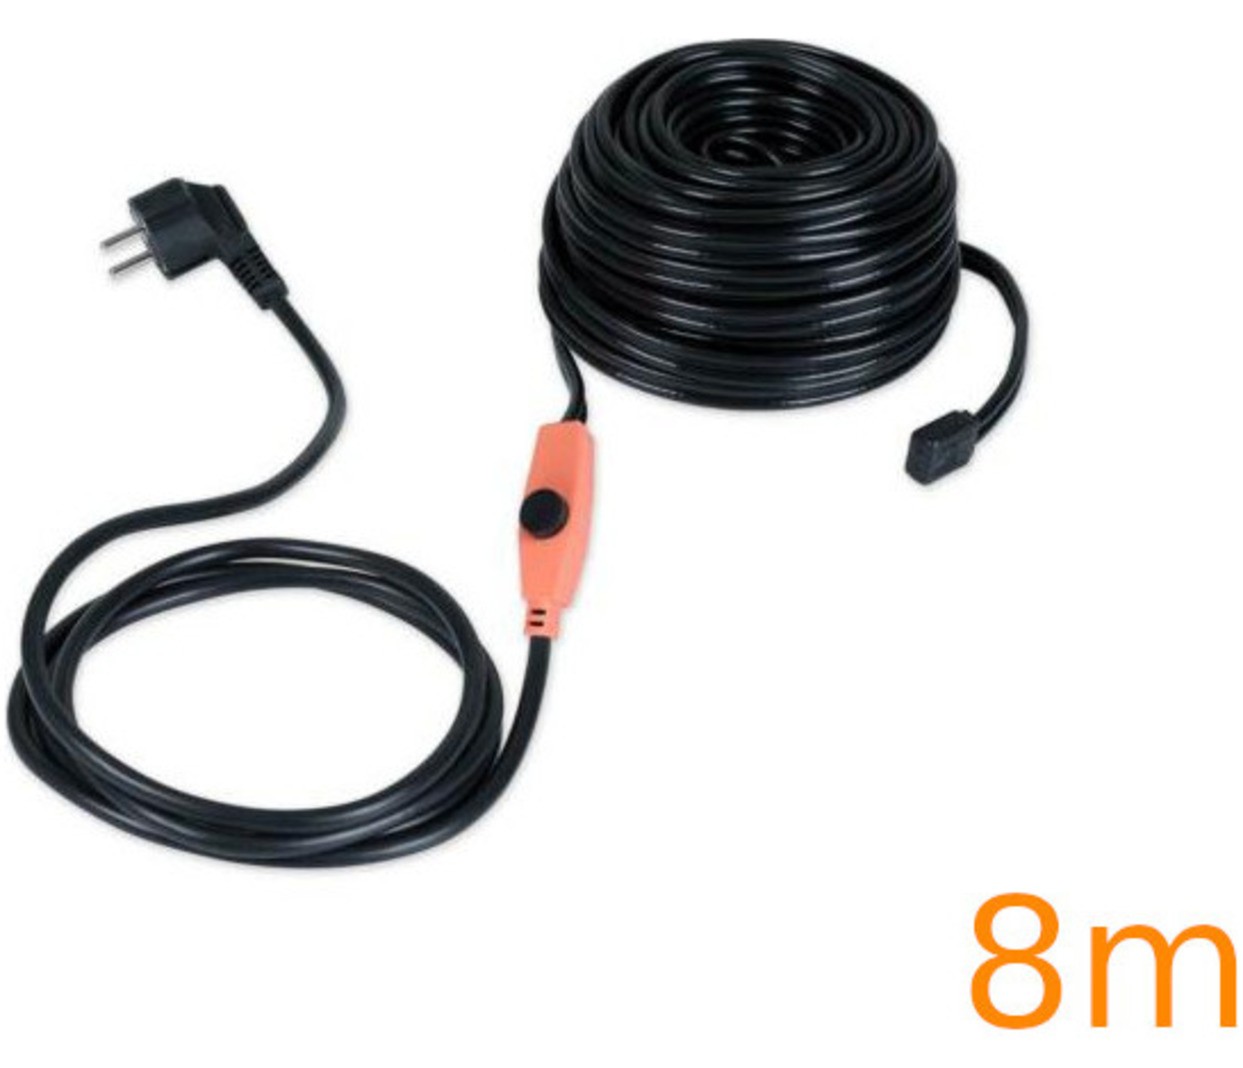 Grelni kabel s temperaturnim senzorjem 8m 128W